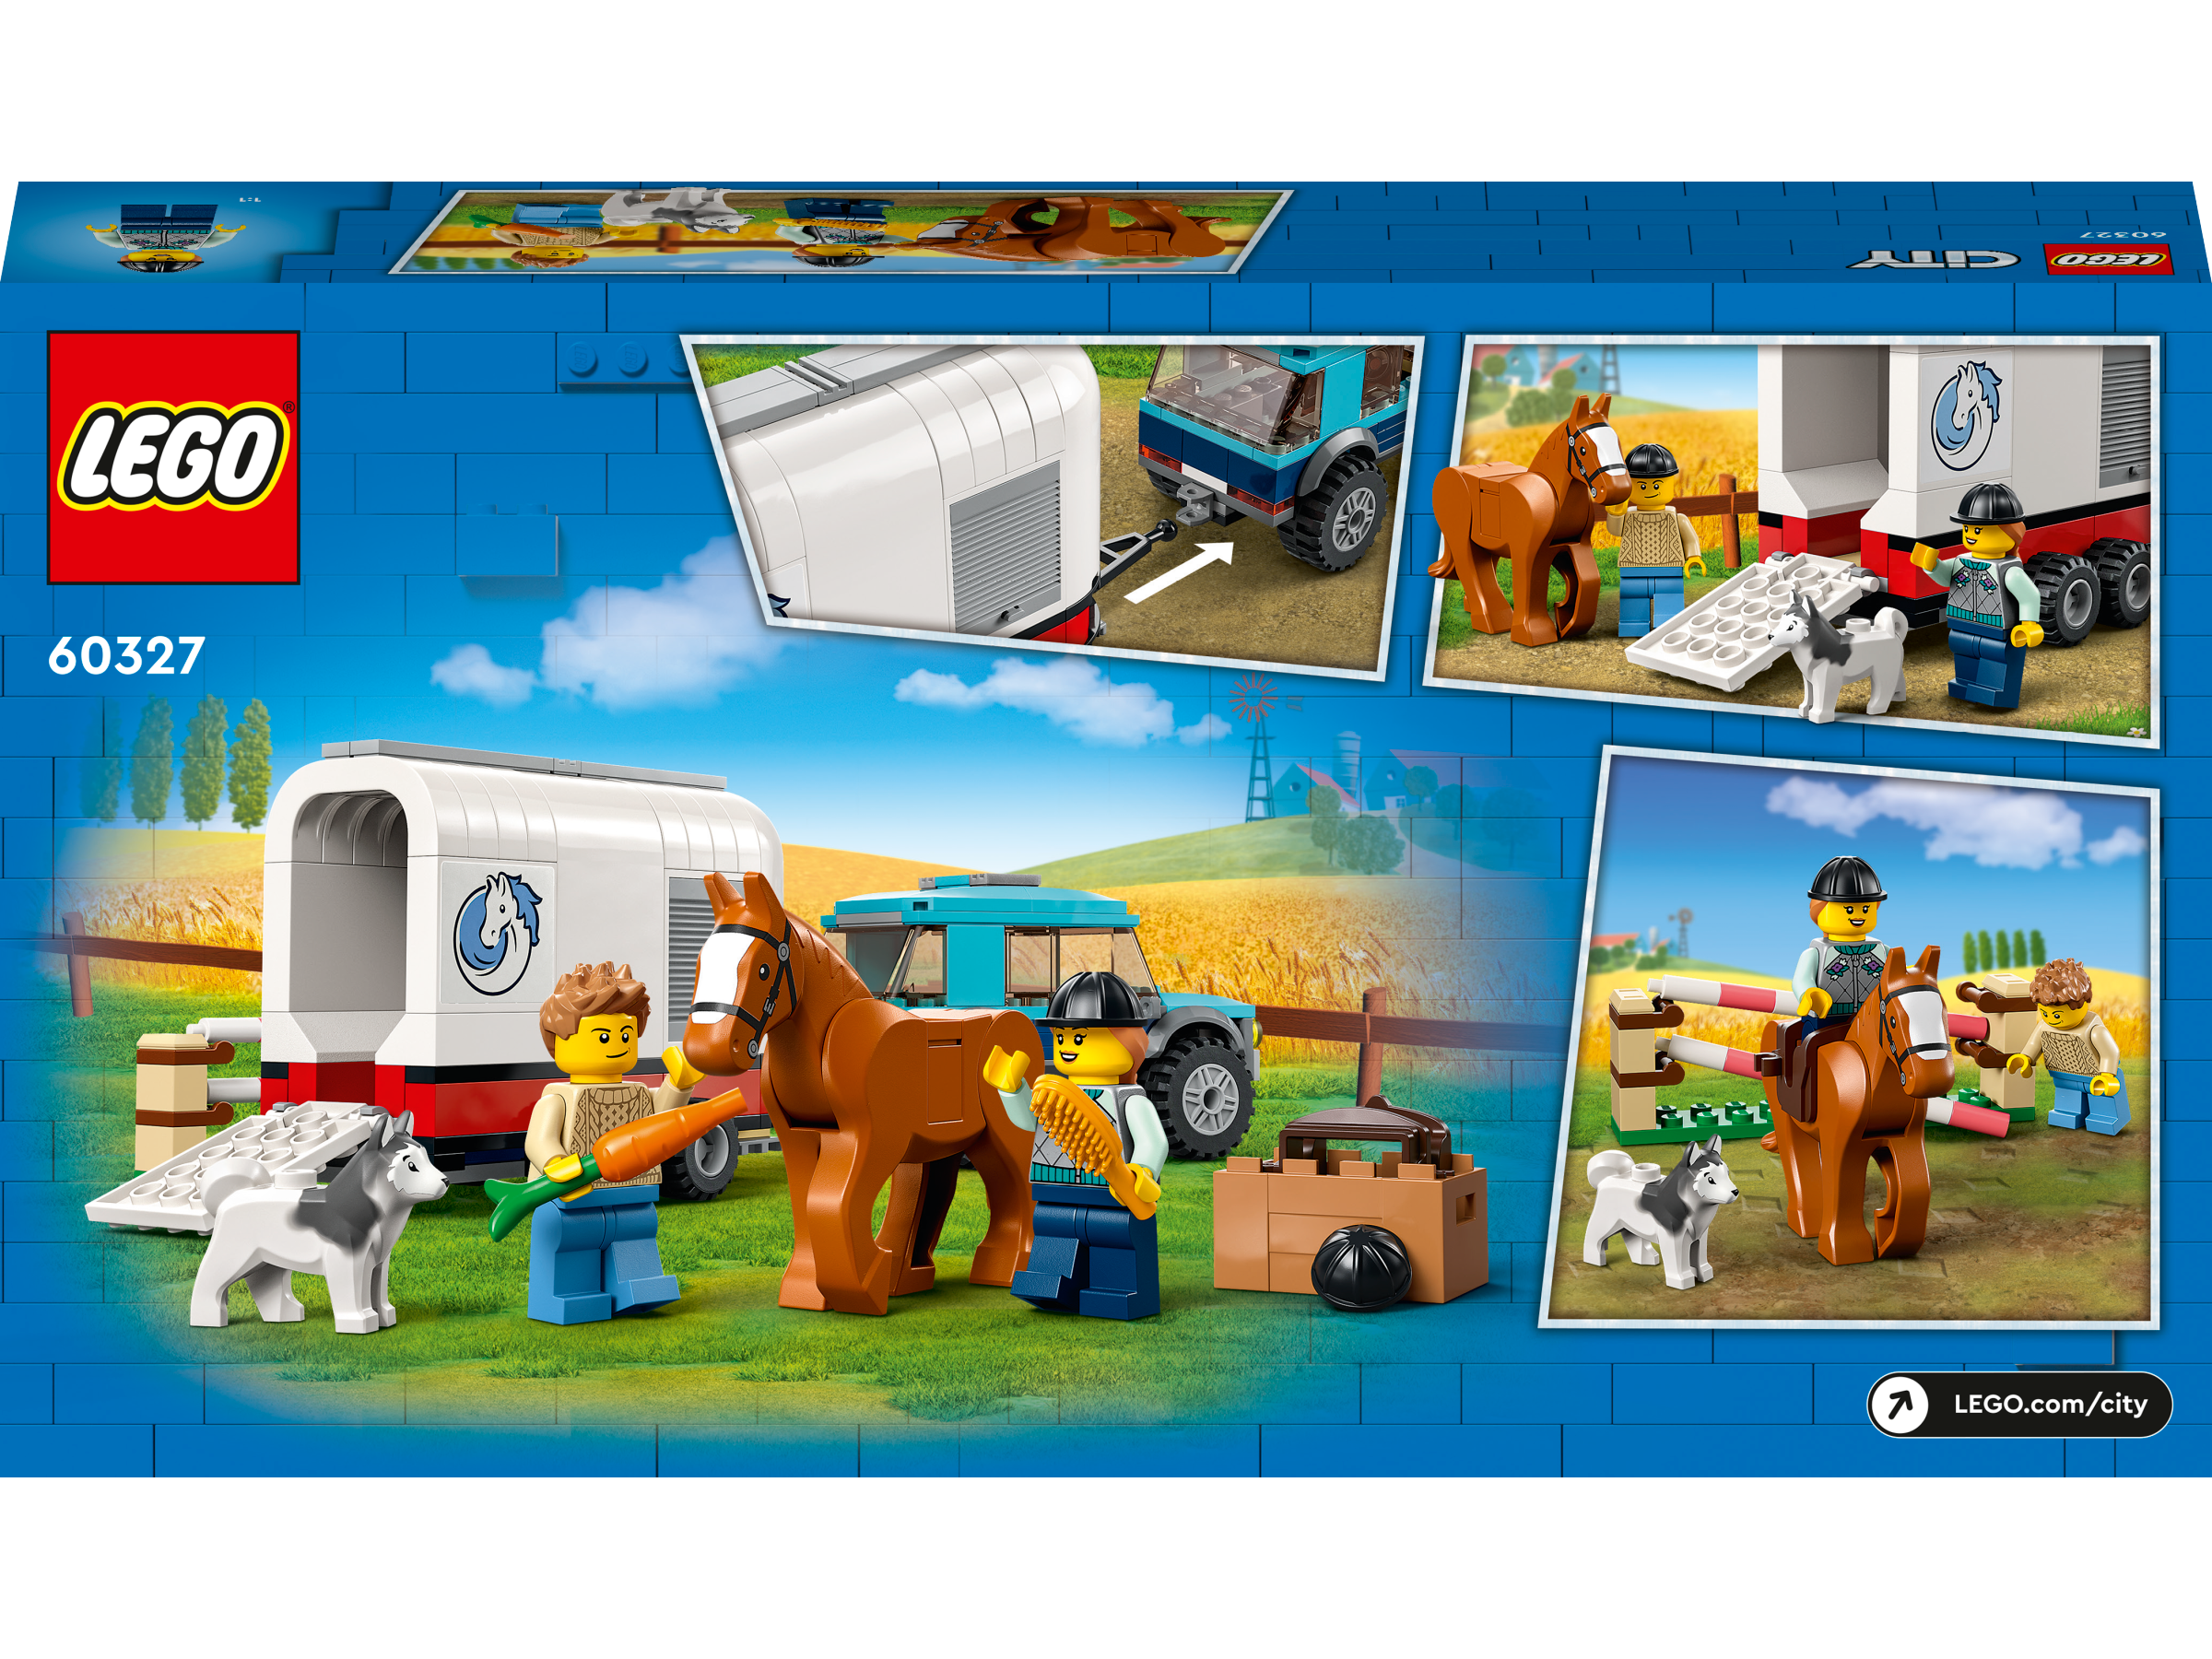 Lego 60327 Horse Transporter